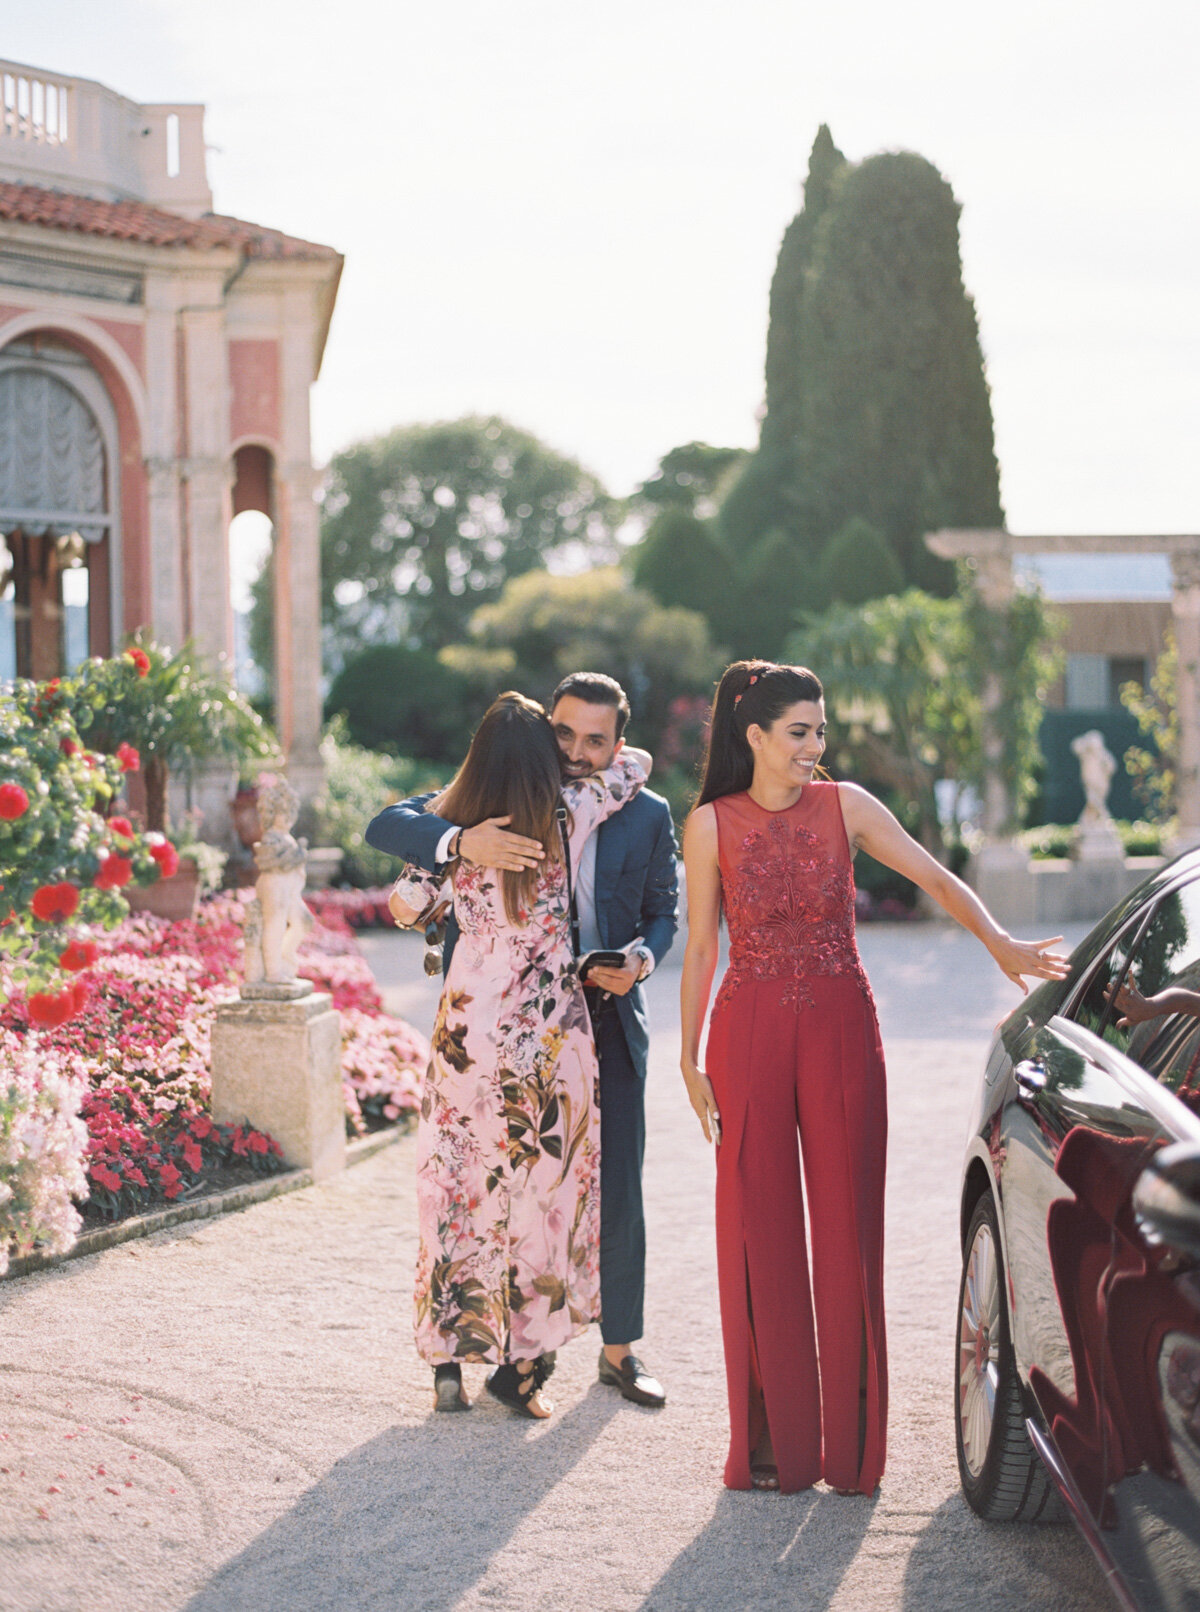 Villa-Ephrussi-de-Rothschild-Monaco-Nice-Saint Tropez-Welcome-Dinner-Katie-Grant-destination-wedding (16 of 37).jpg